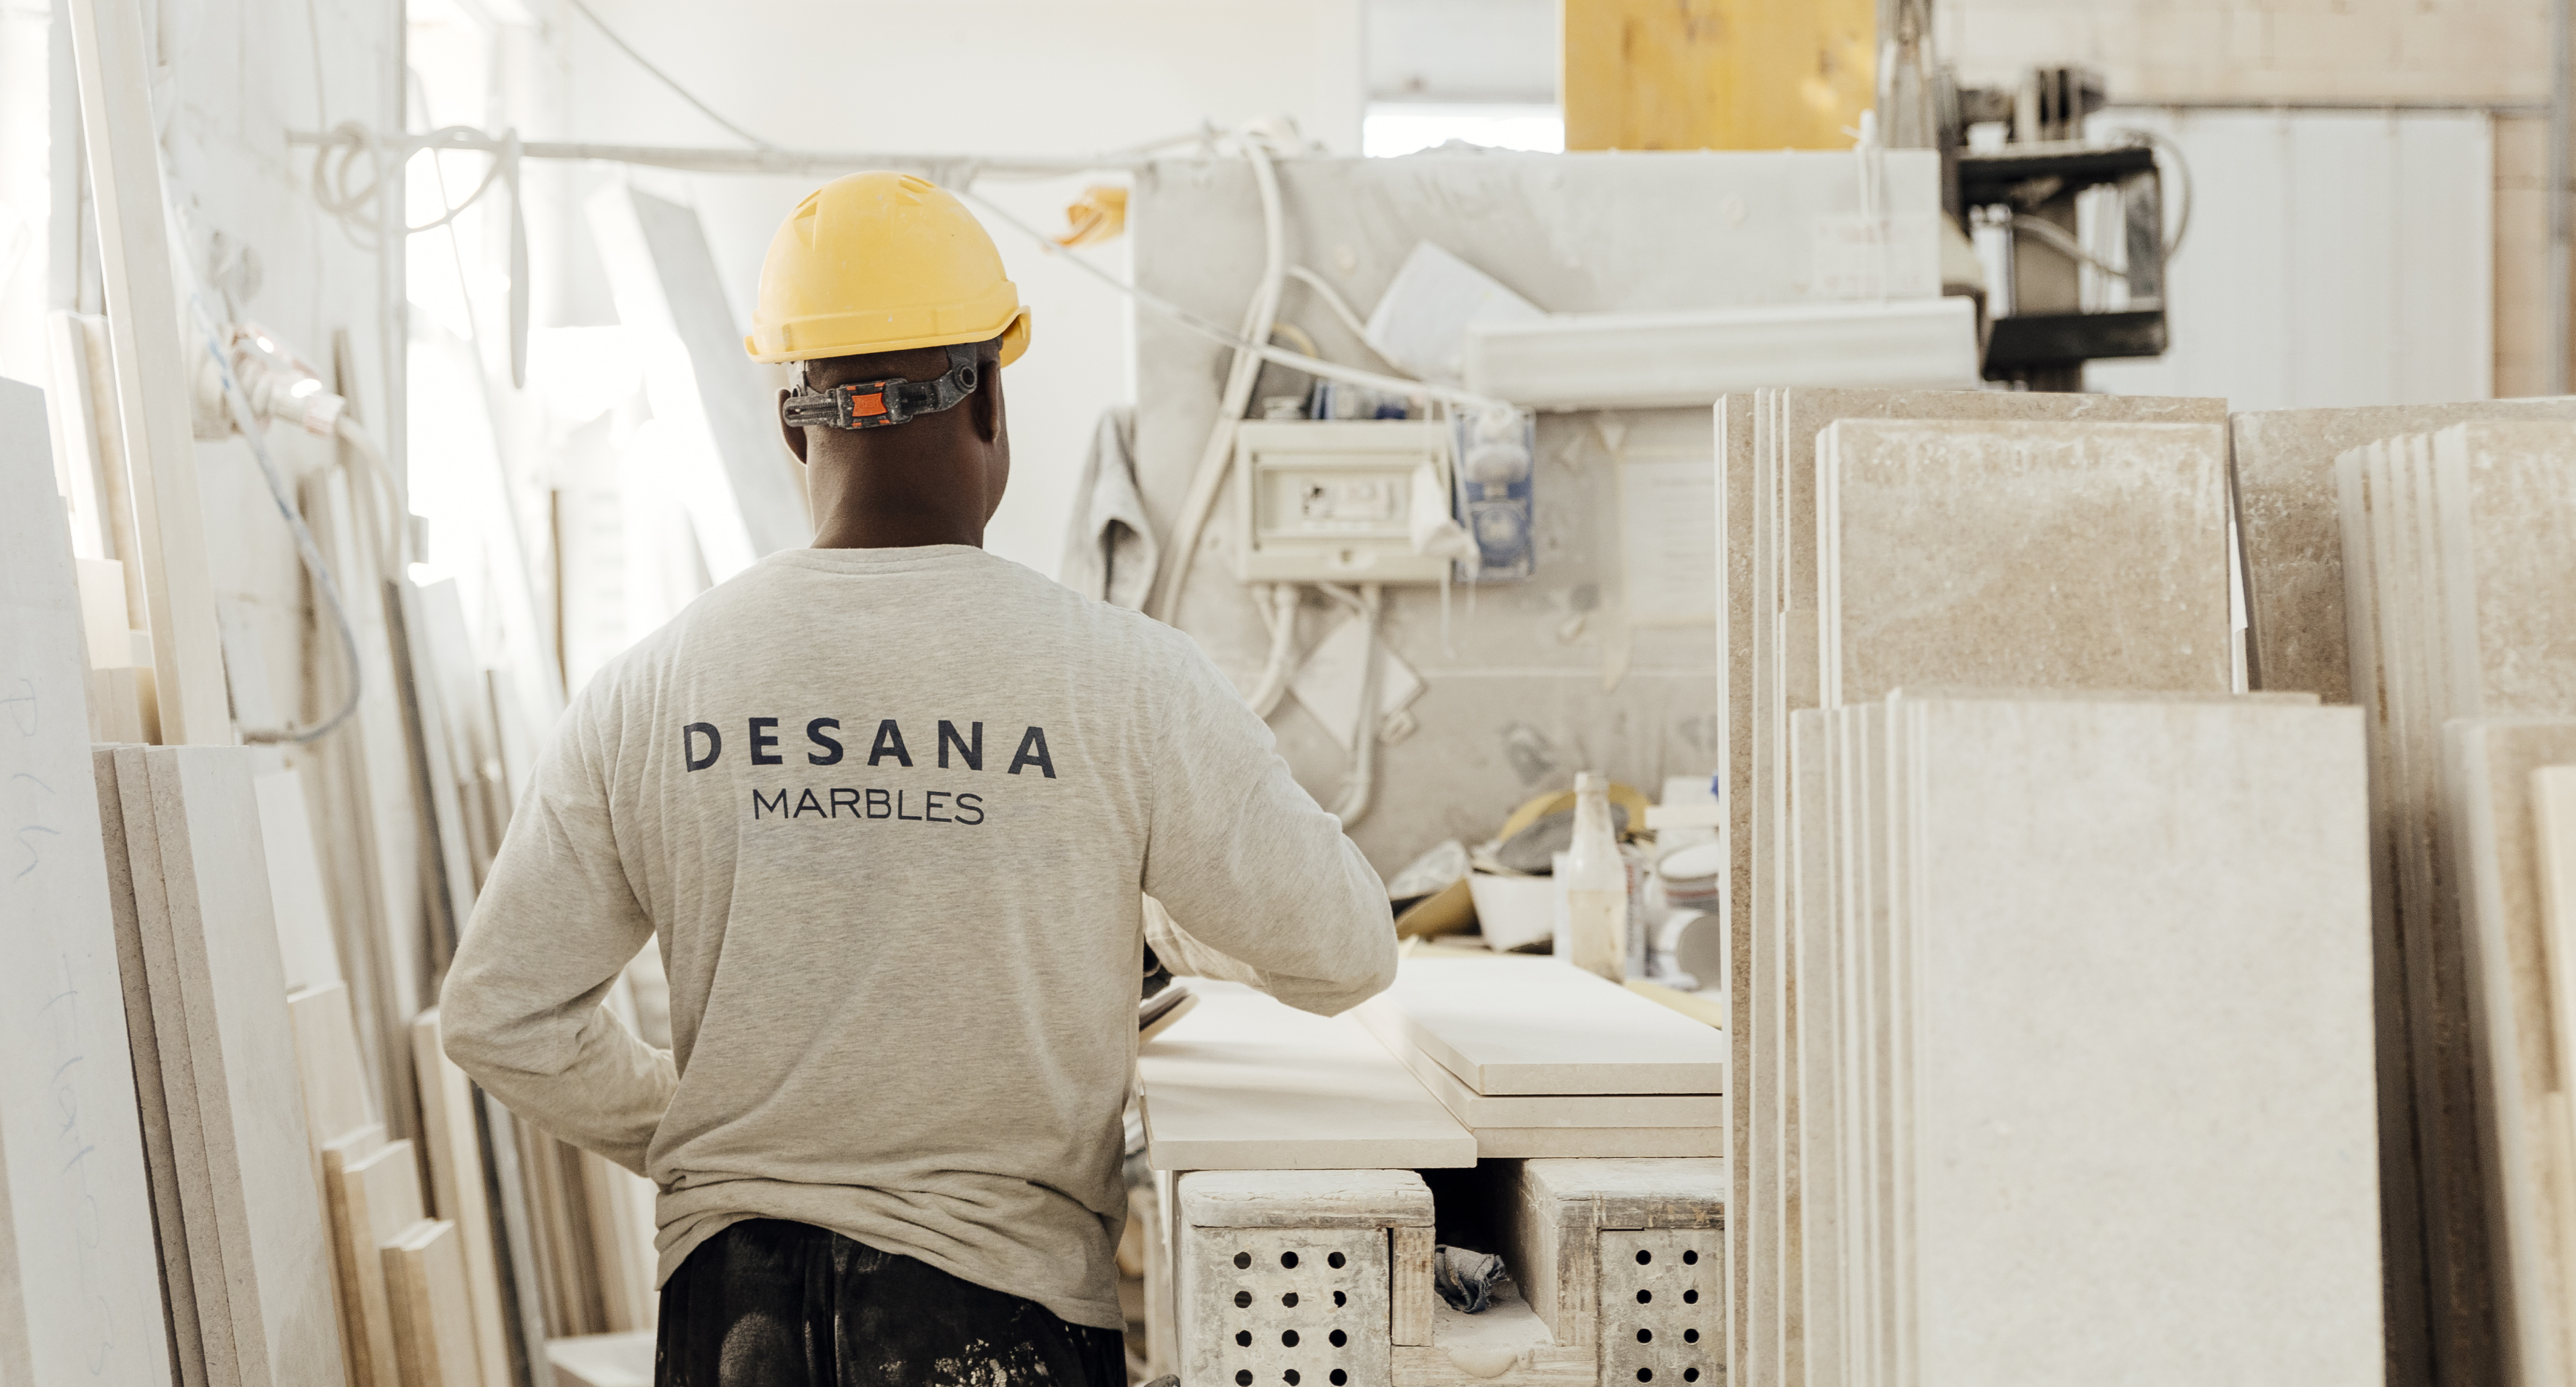 desana marbles worker warehouse